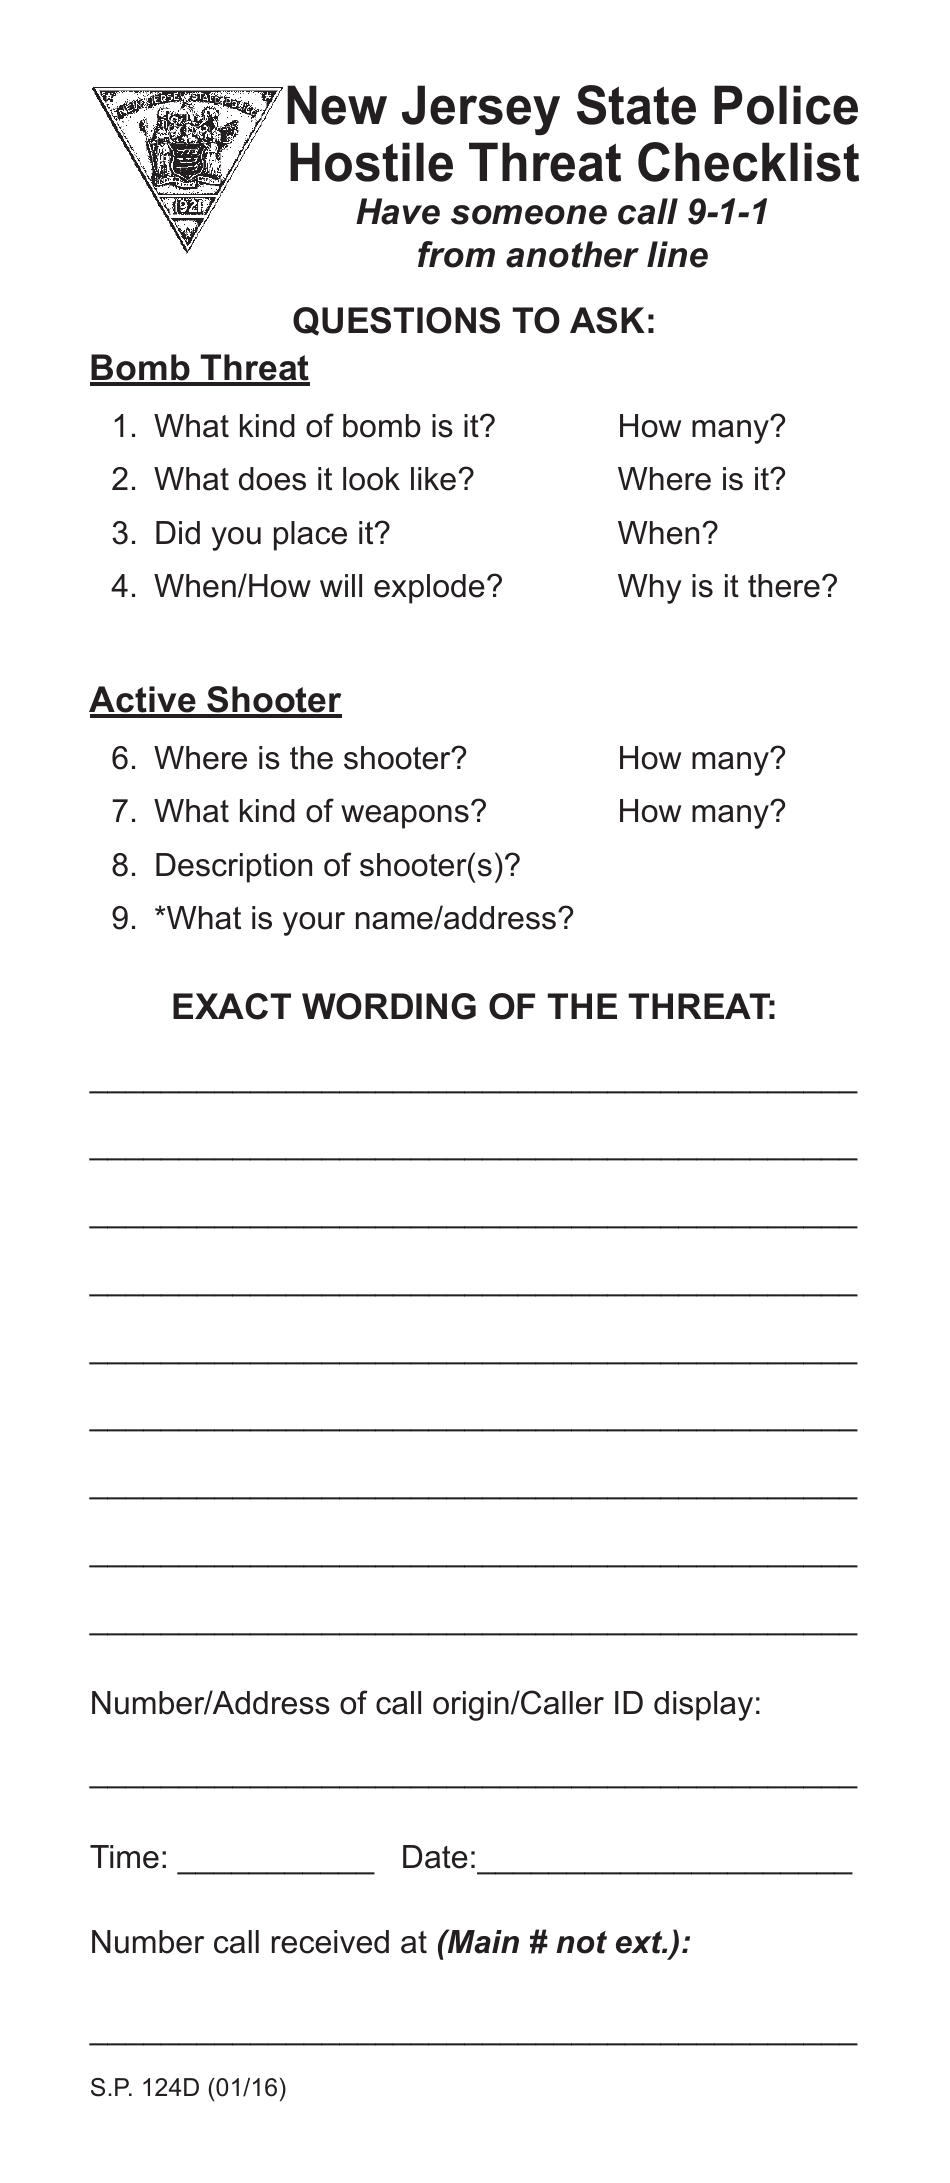 Form S.P.124D Hostile Threat Checklist - New Jersey, Page 1